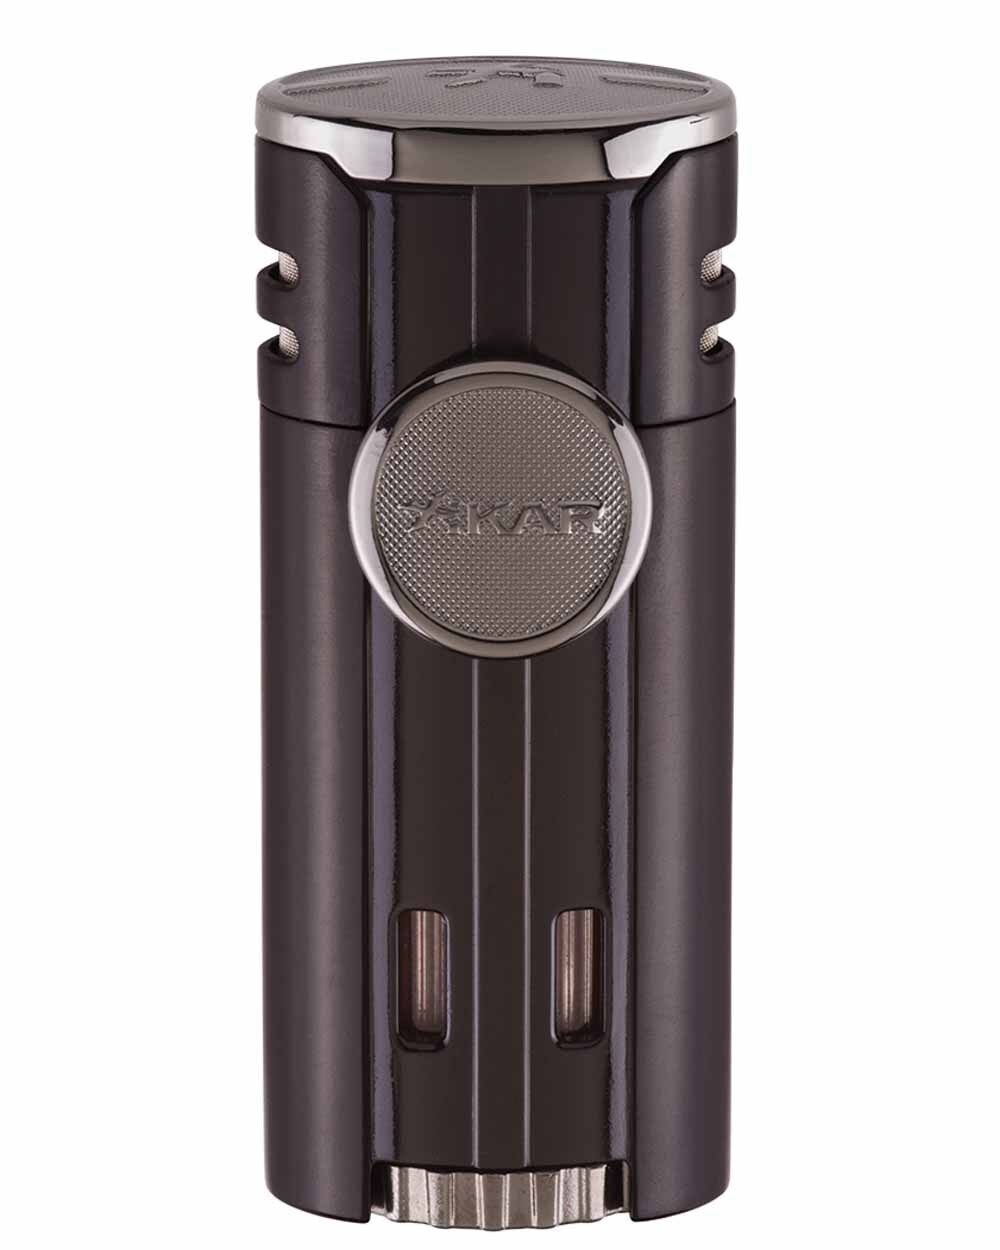 XiKAR 574BK HP4 Quad Flame Cigar Lighter Gift Box Warranty Matte Black